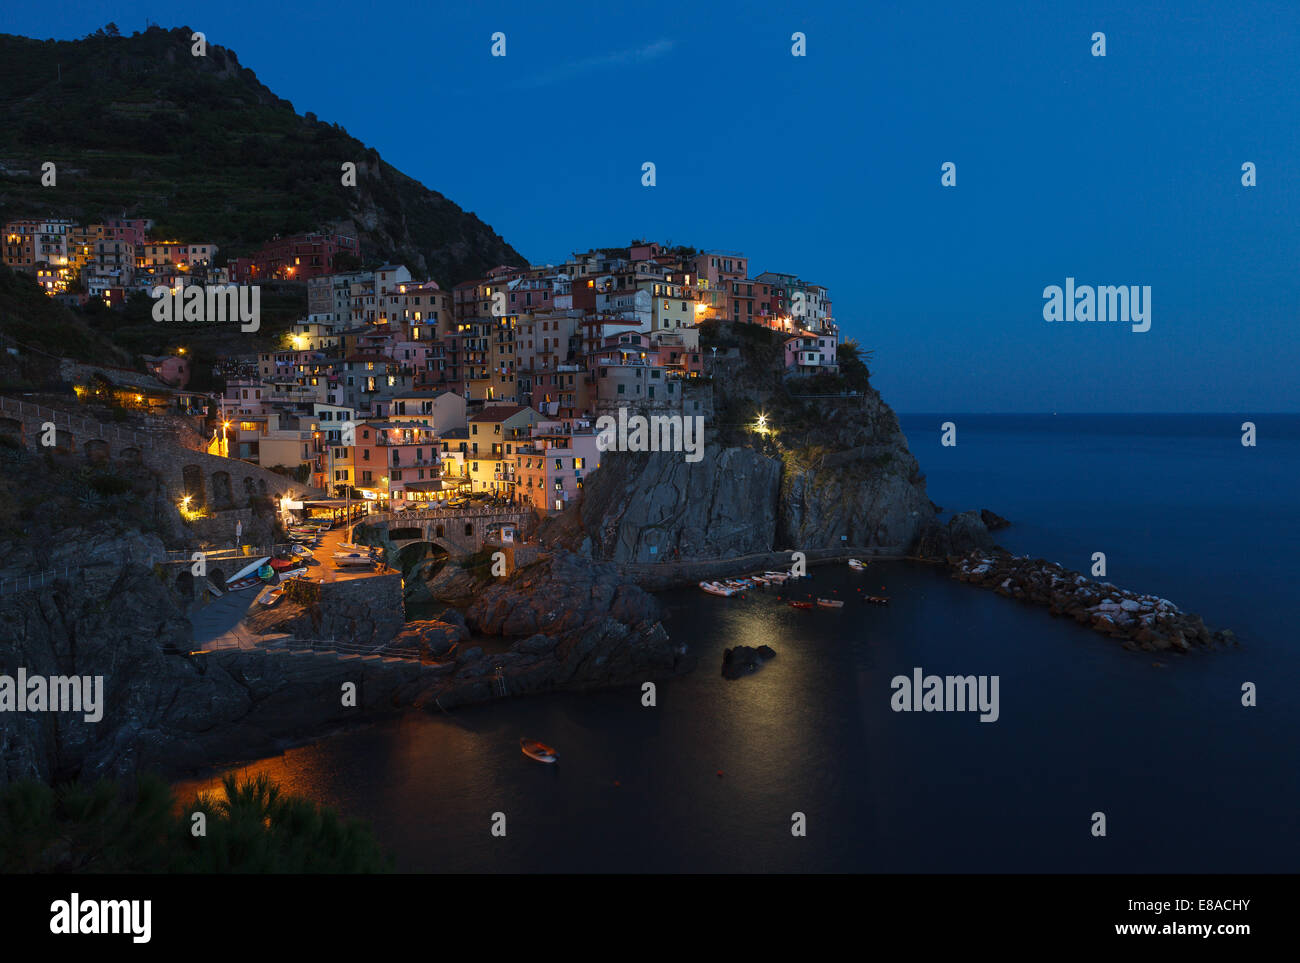 Manarola in the evening, Cinque Terre (Five Lands) National Park, Liguria, Italy, Europe. Stock Photo